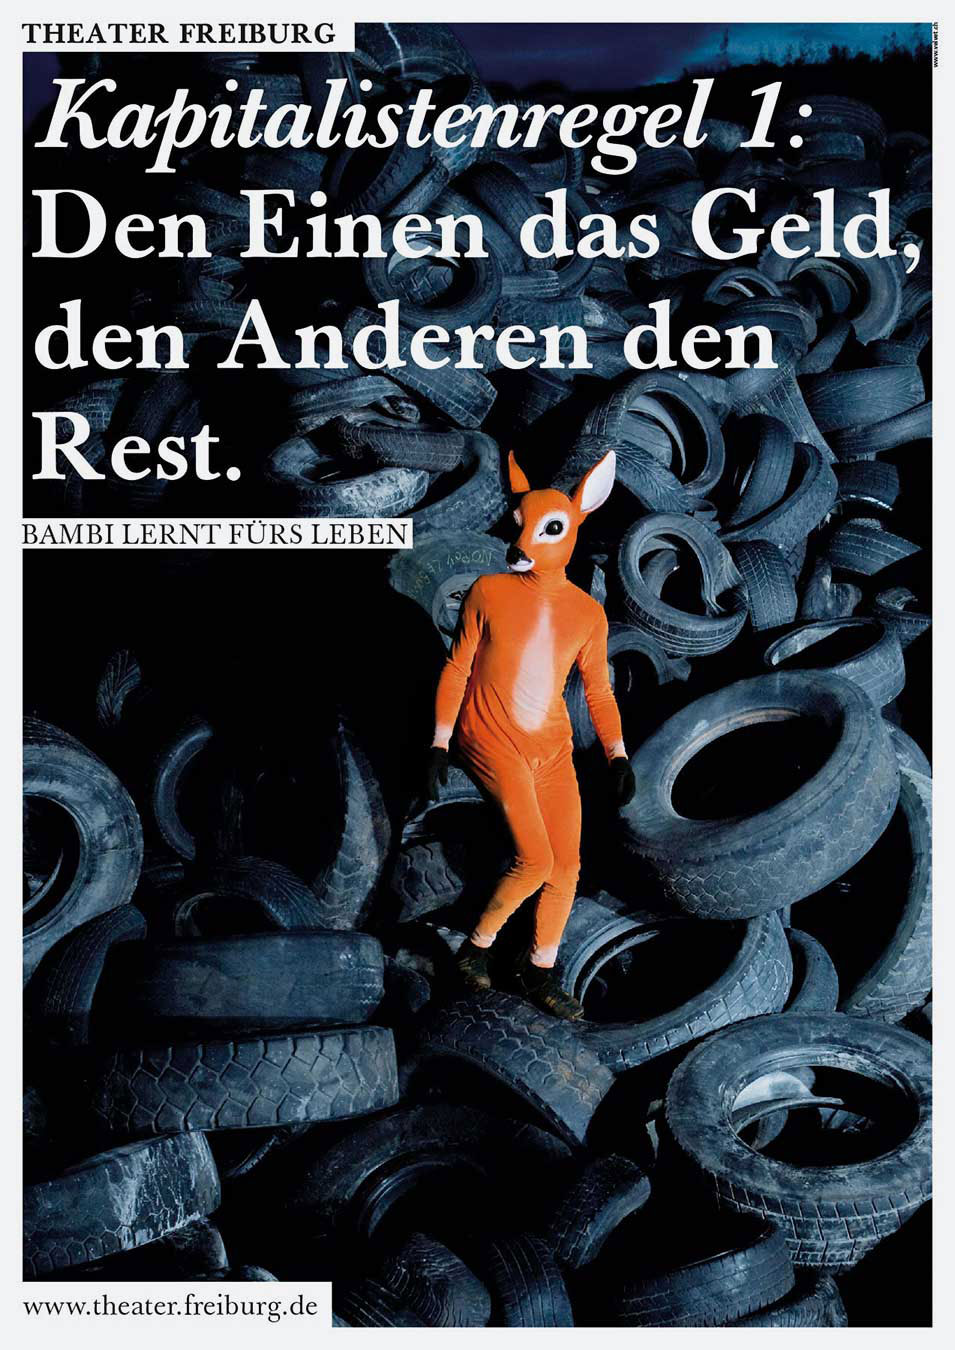 Theater Freiburg Bambi macht Theater Keyvisual Werbung